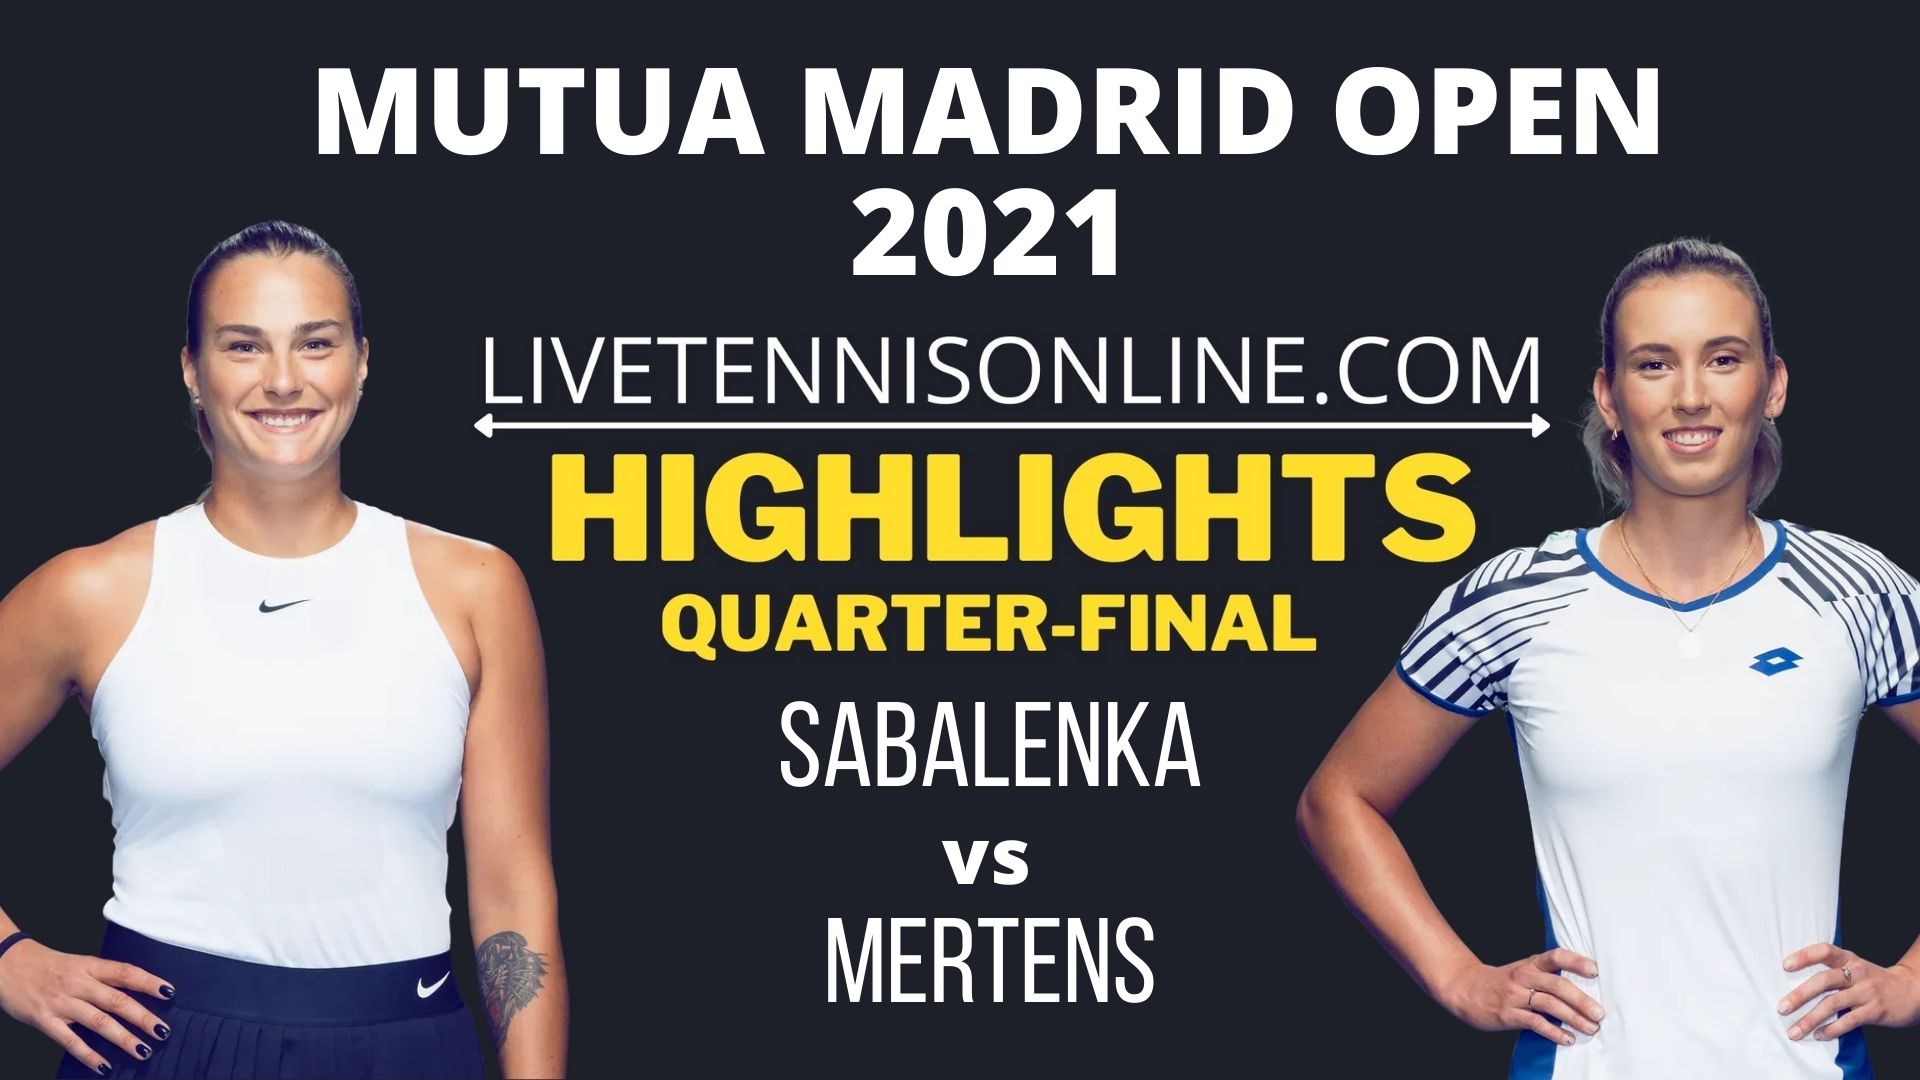 Sabalenka Vs Mertens Quarter Final Highlights 2021 Madrid Open